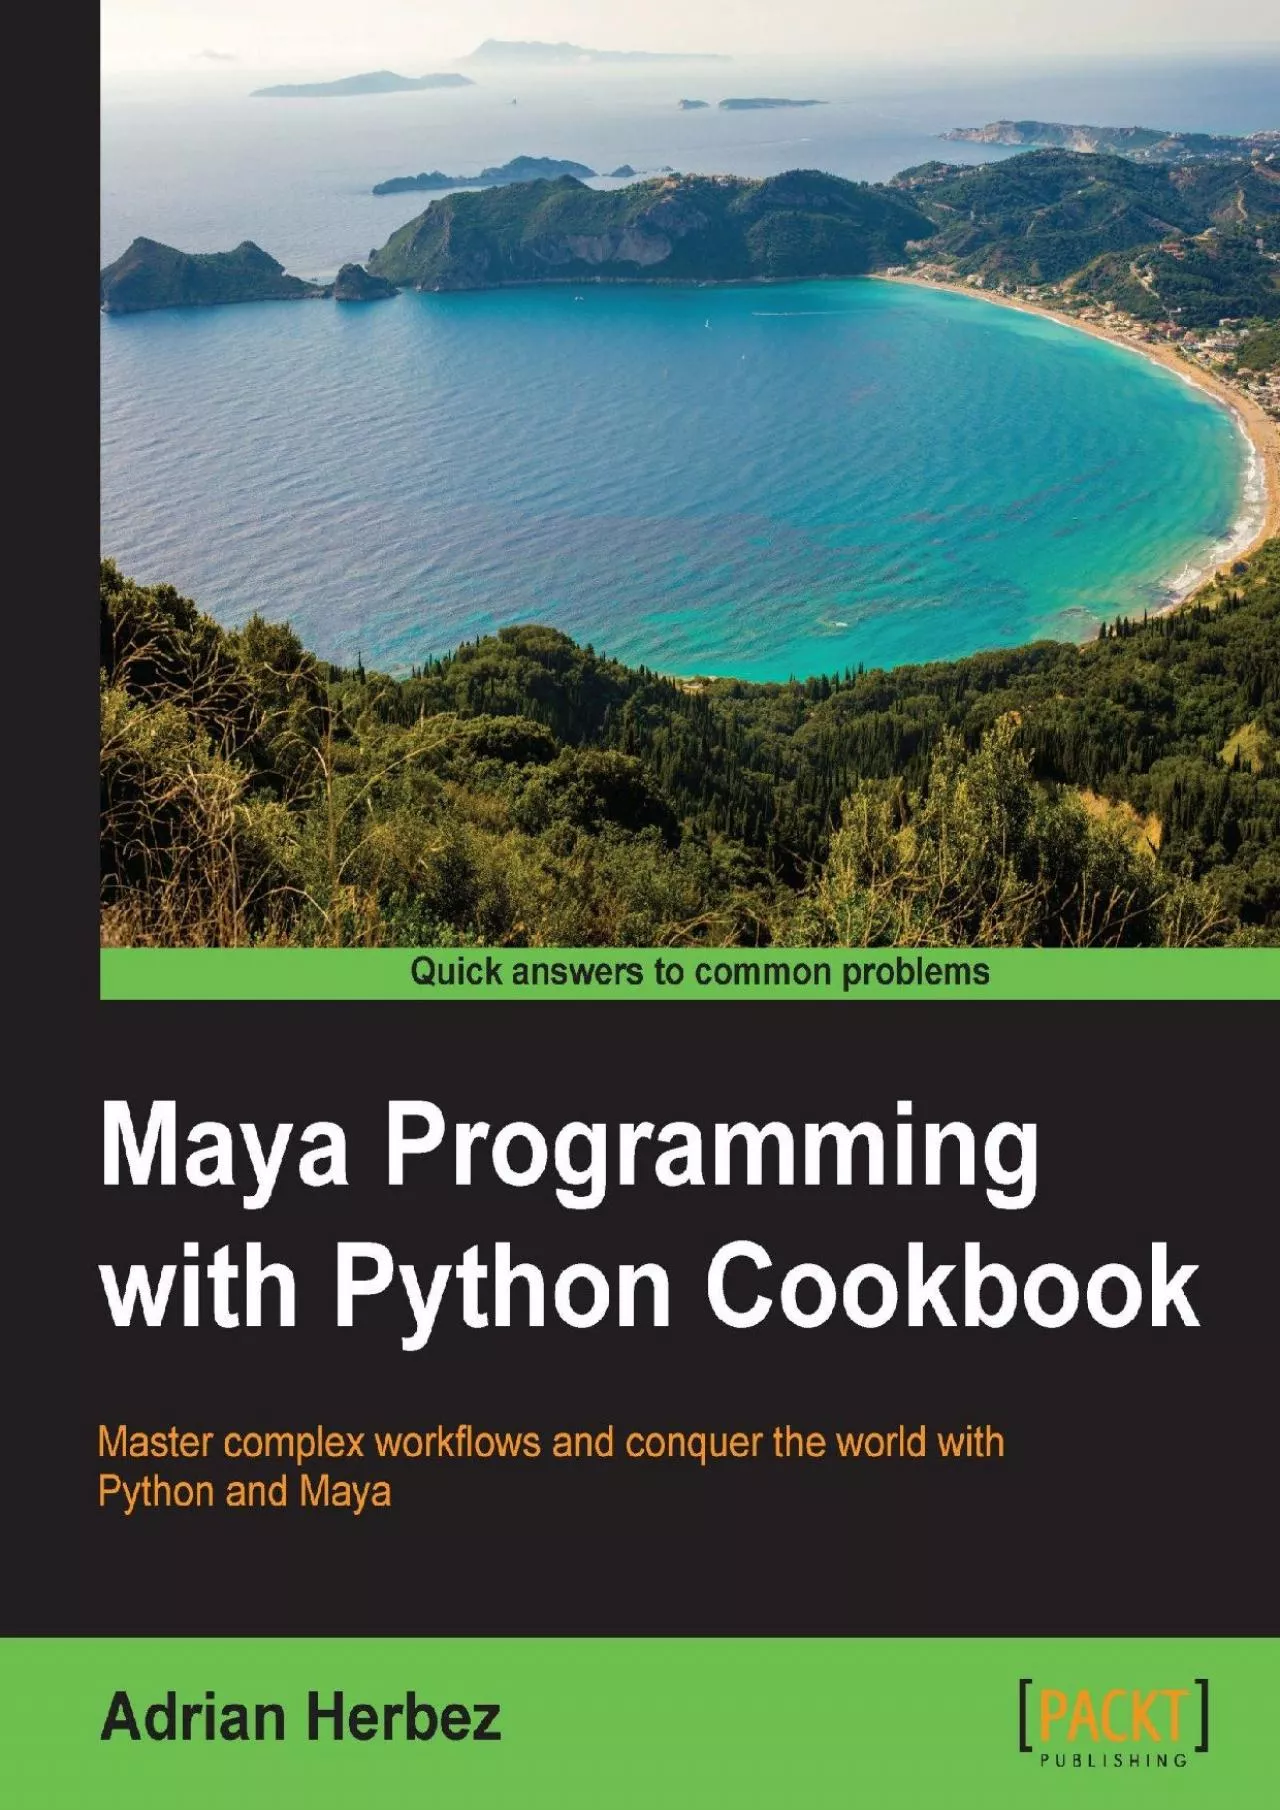 [BEST]-Maya Programming with Python Cookbook